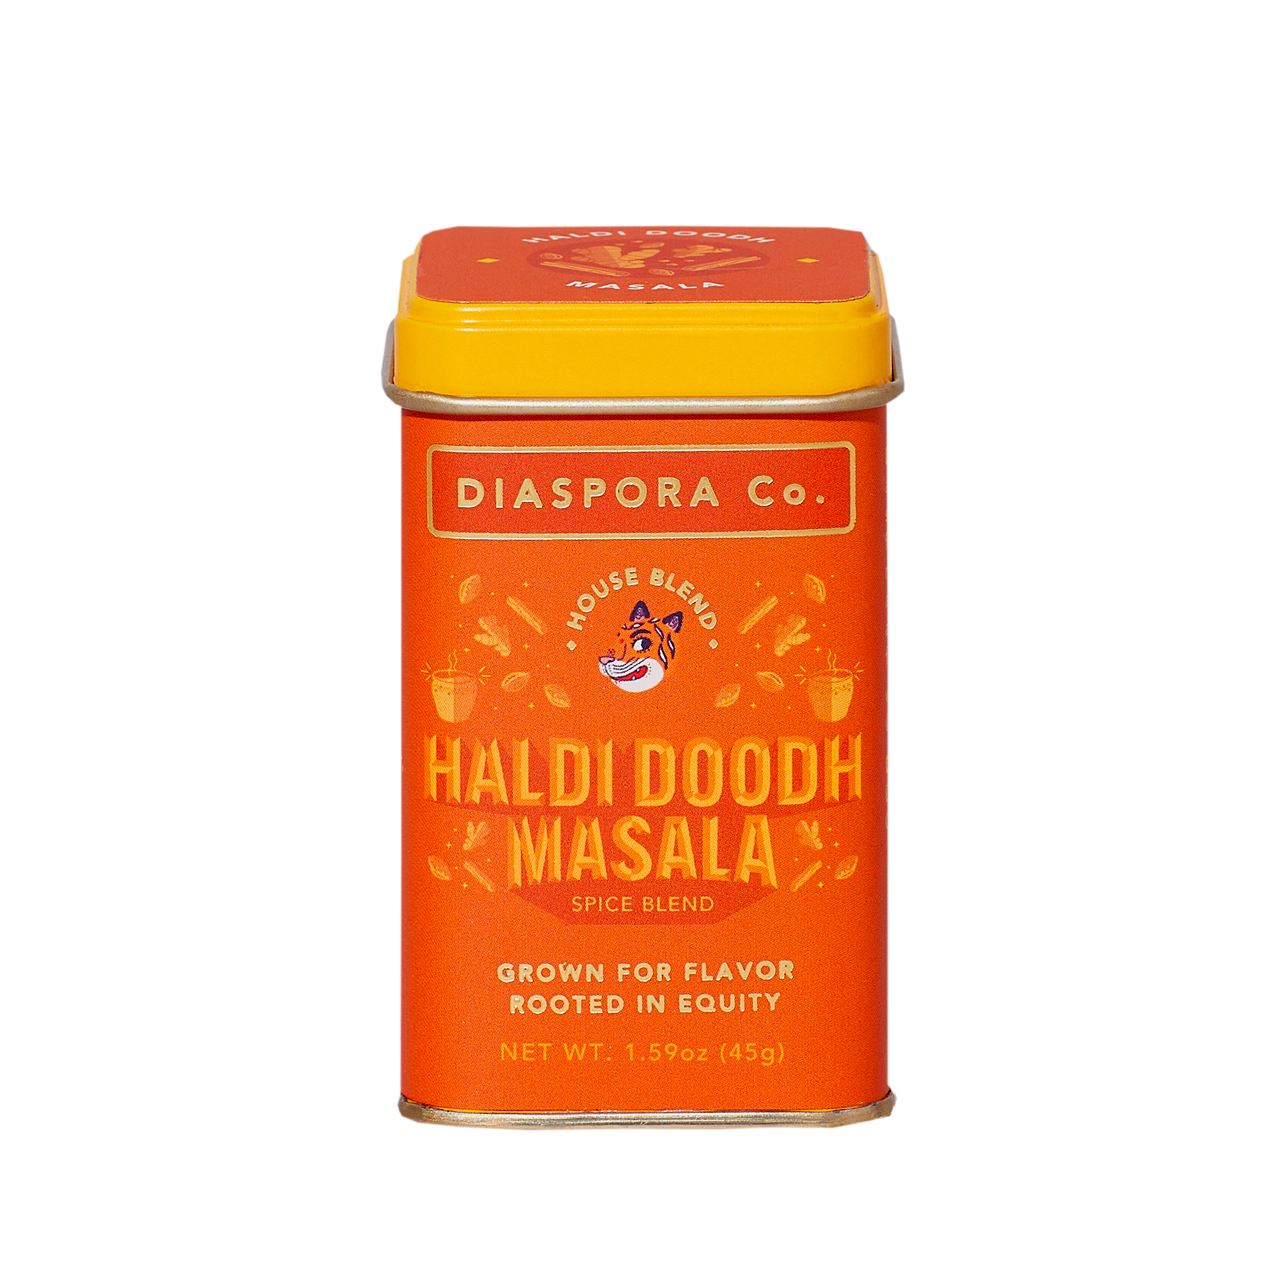 Haldi Doodh (Golden Milk) Masala: 45g Everyday Tin